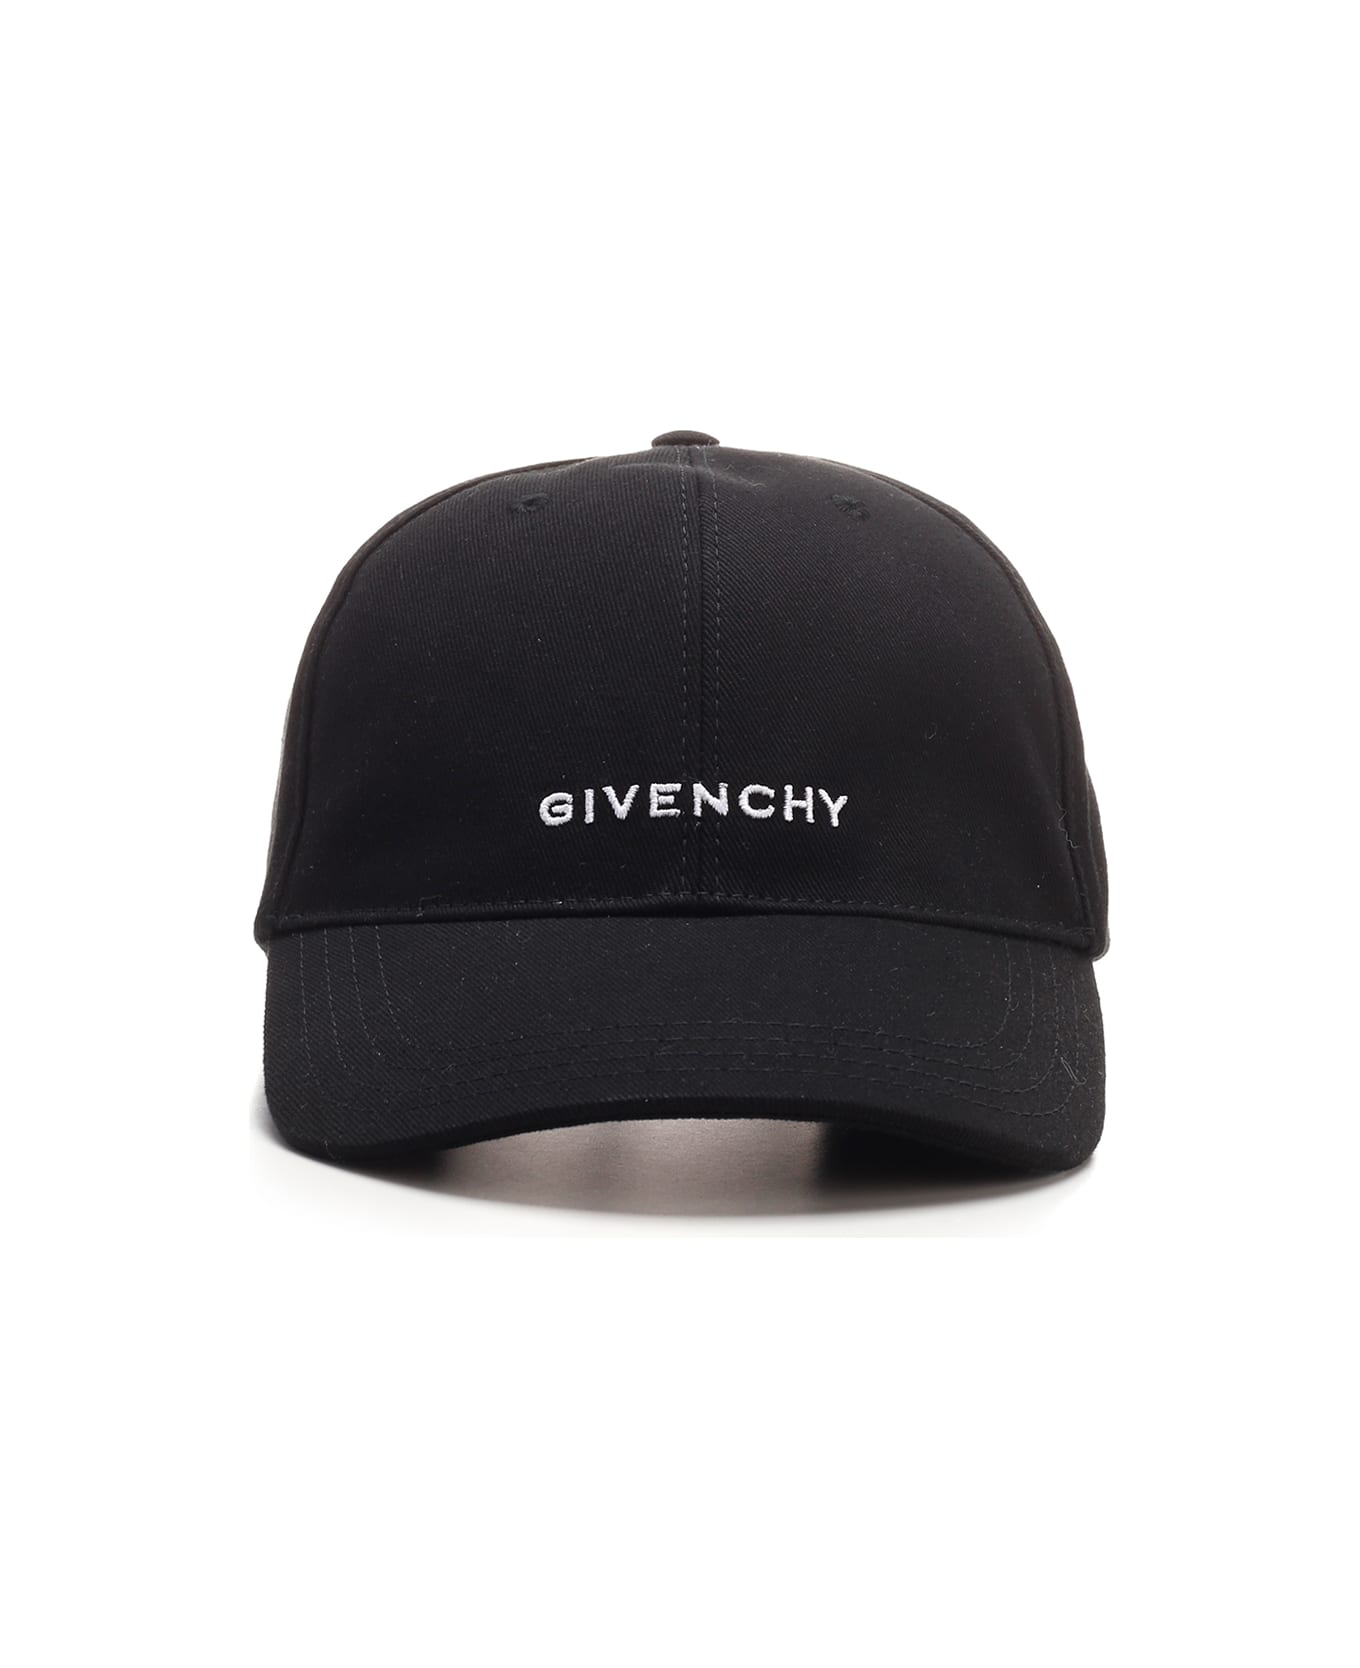 Givenchy Black '4g' Baseball Cap - Black